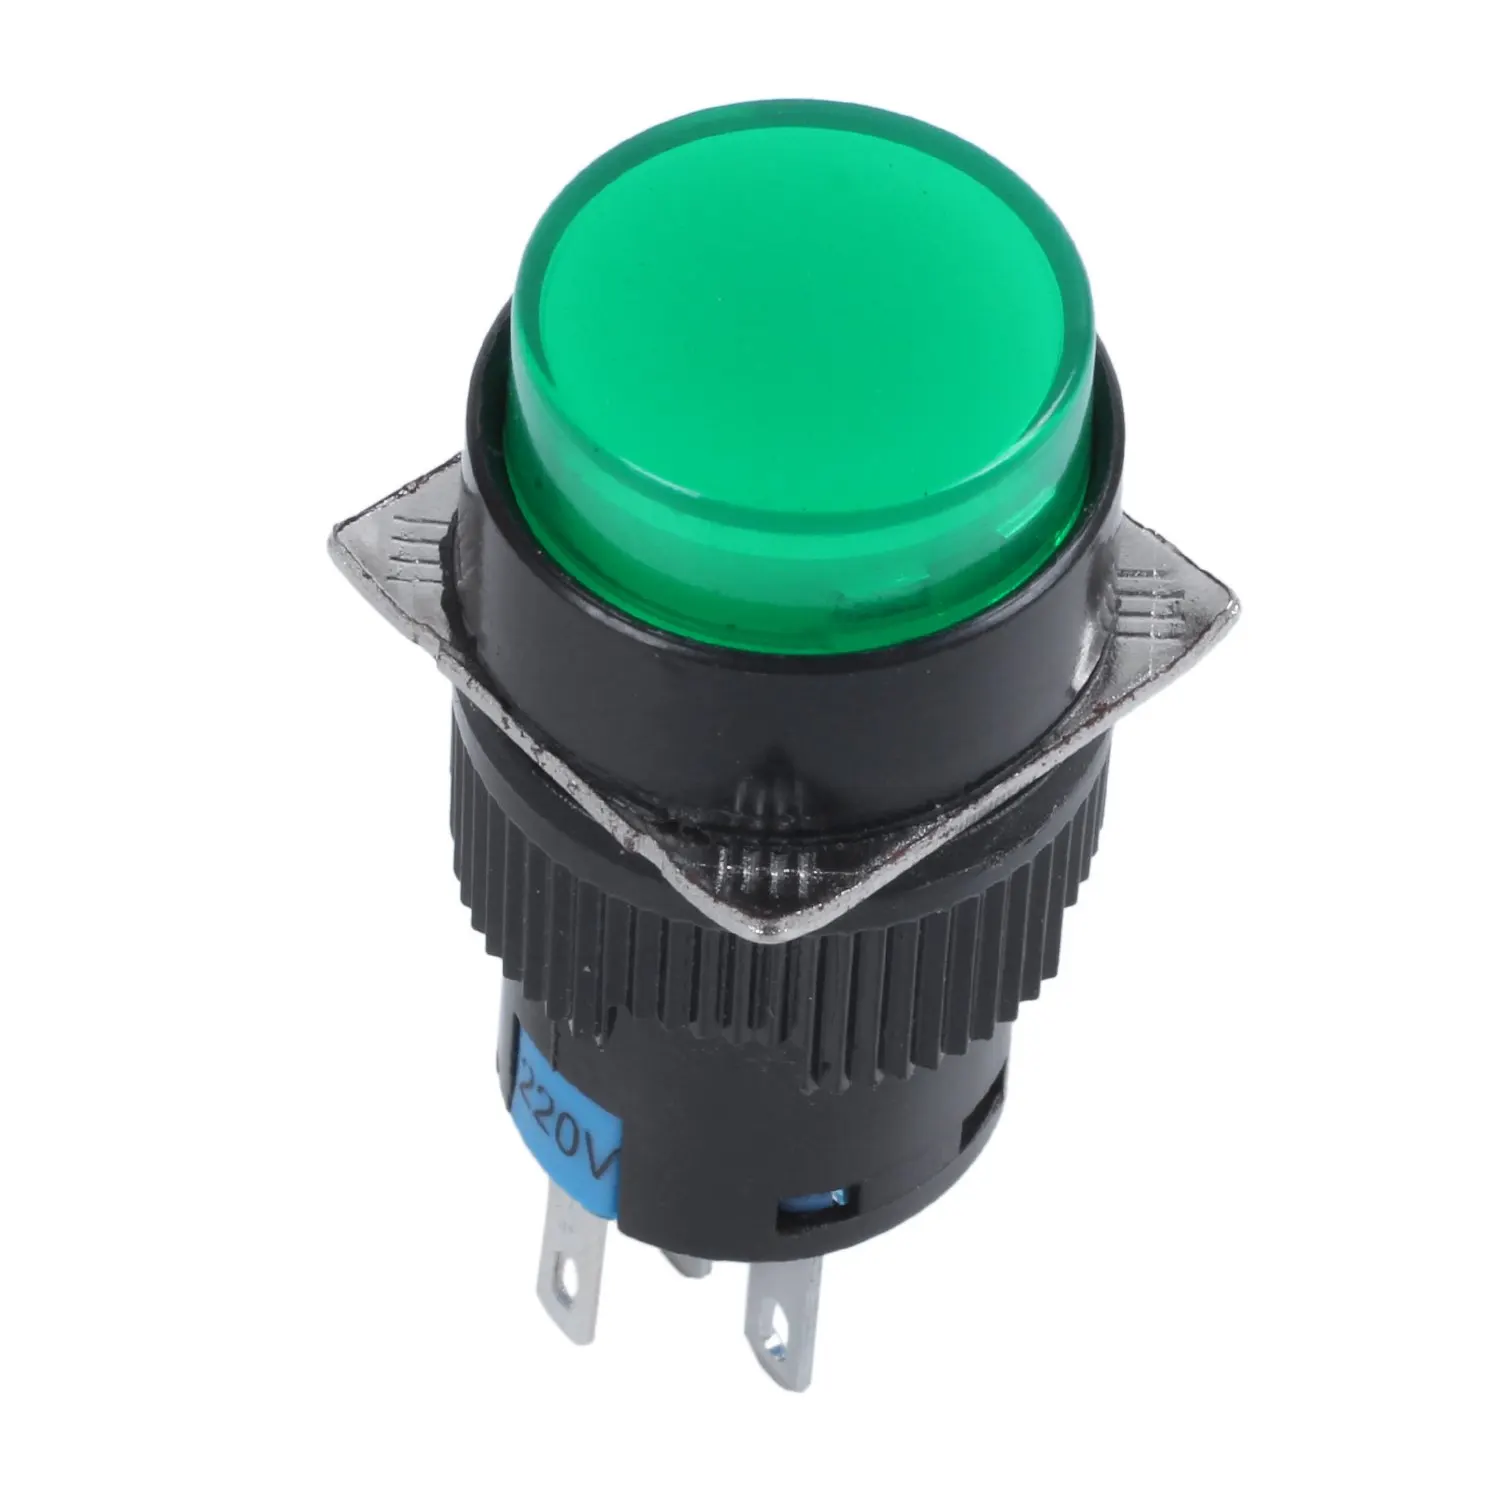 AC 250V 5A SPDT 1NO 1NC 5 סיכות הבריח ירוק החלף לחצן w 220V מנורת LED . ' - ' . 1